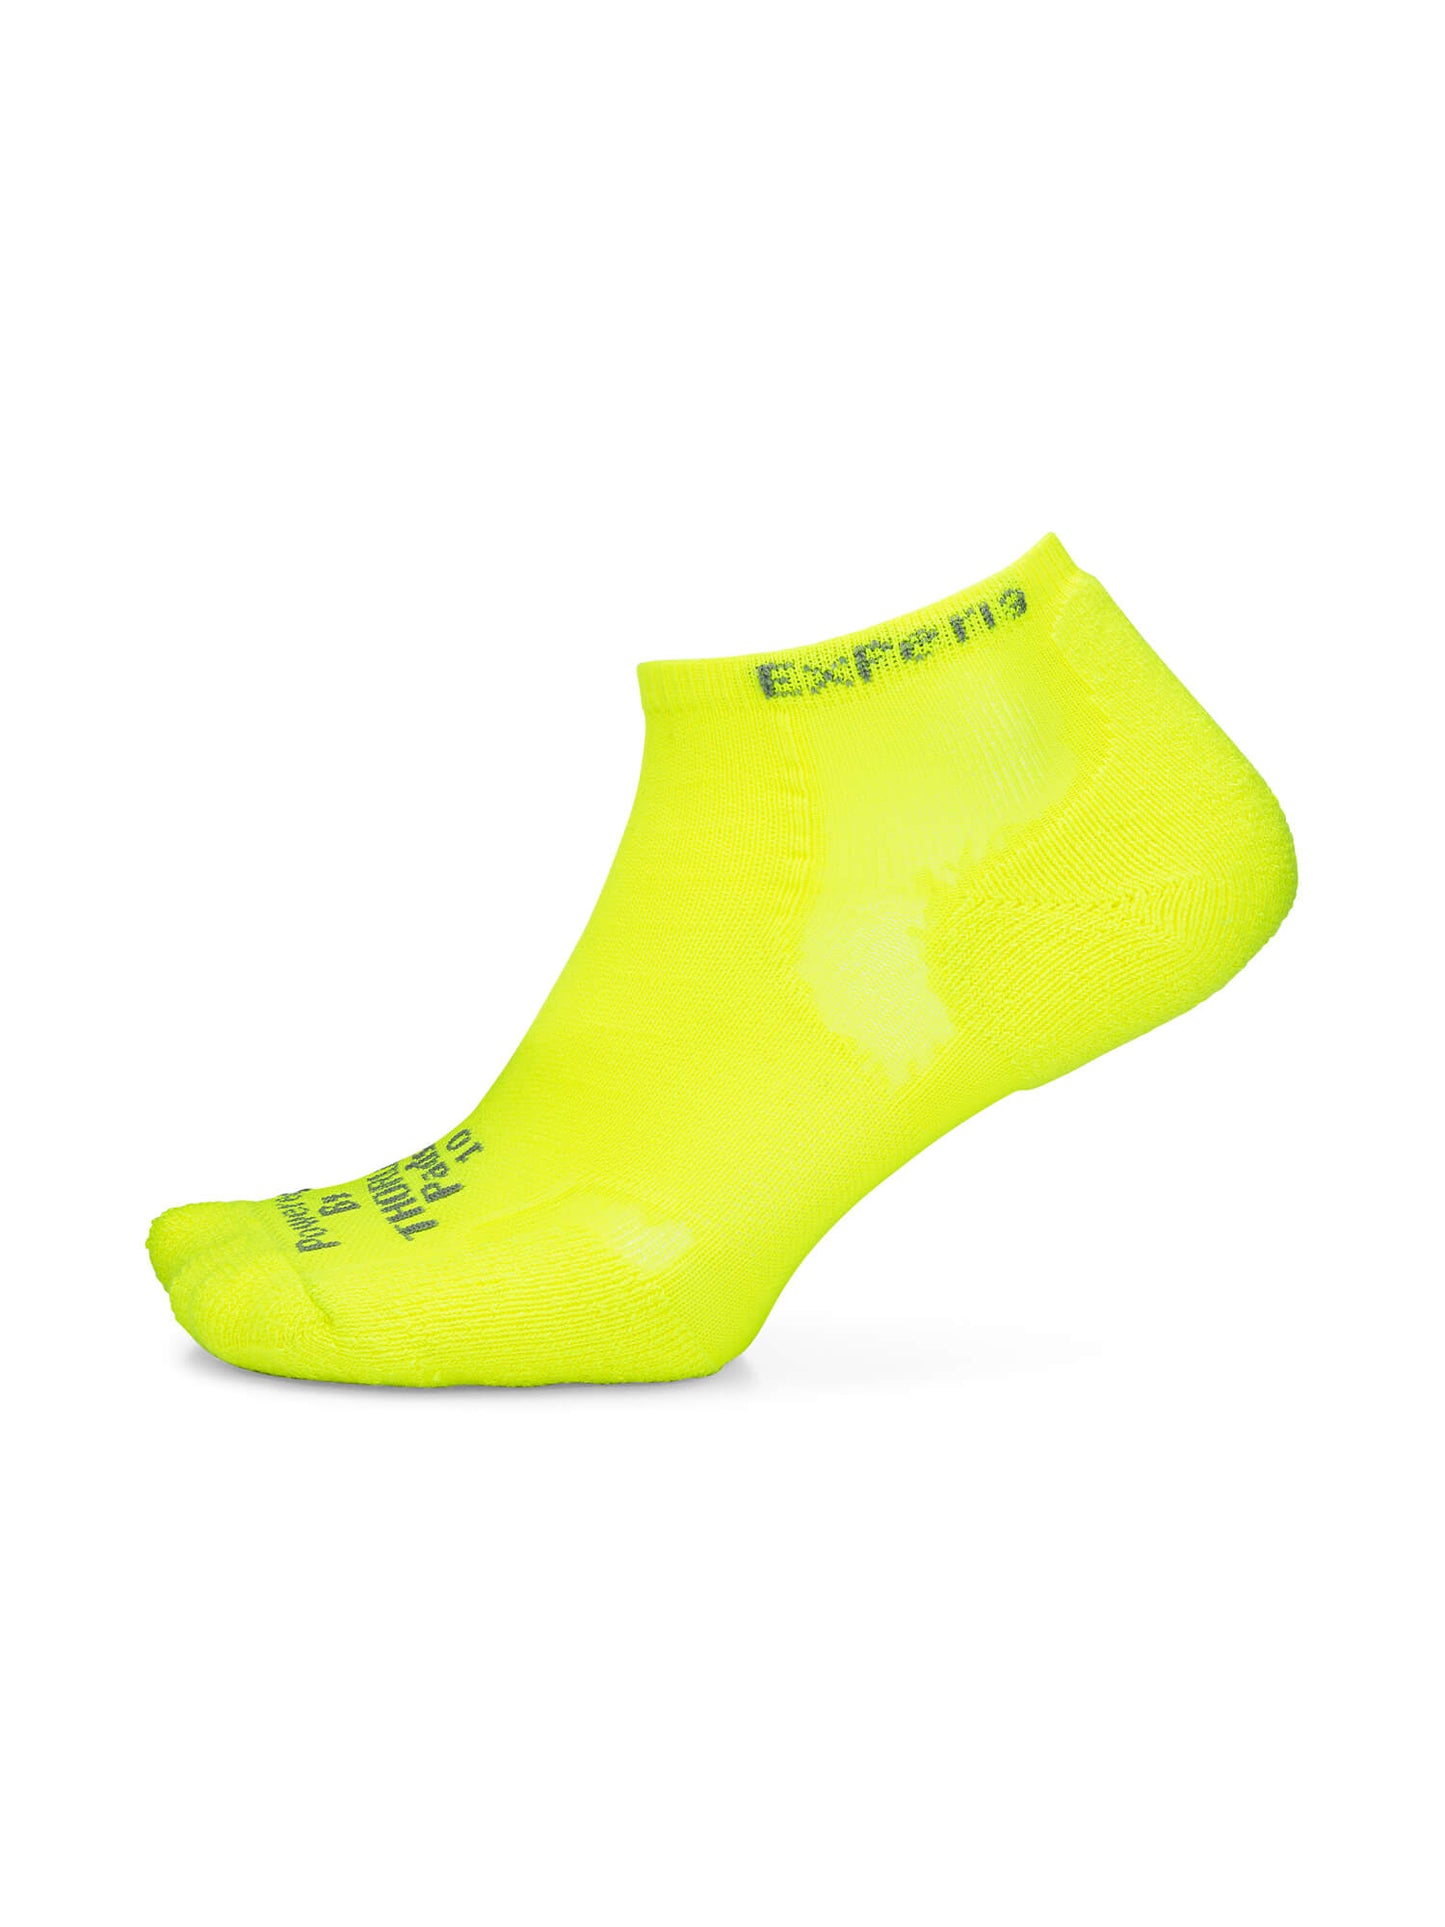 Fluorescent yellow Thorlos Experia Coolmax Micro Mini Padded Socks